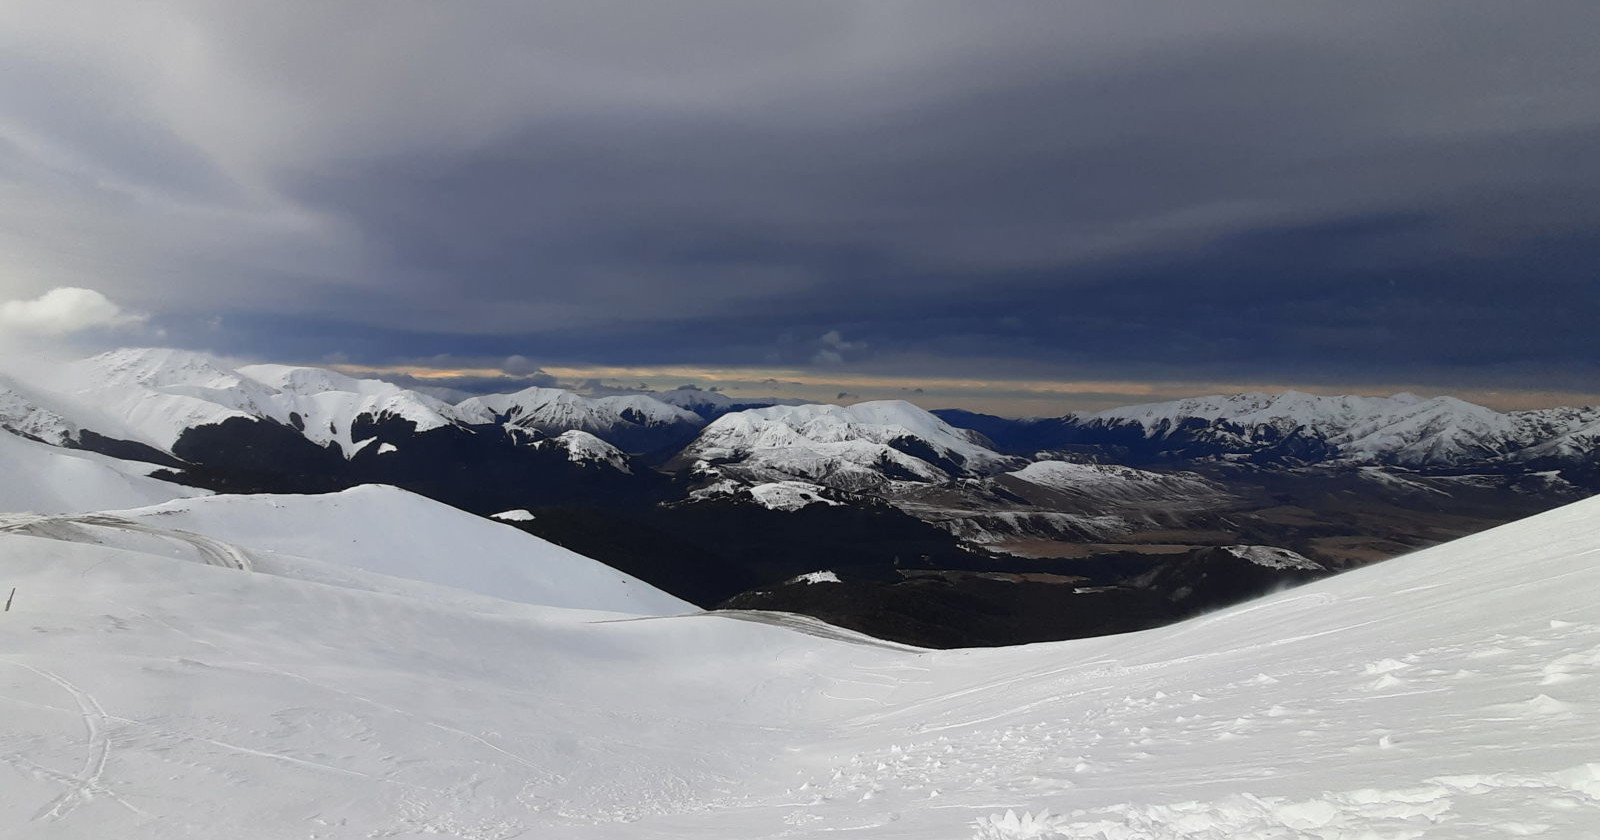 Marek Kuziel - CMC Intro to Ski Mountaneering Course - Day 2 - View from Mt Cheeseman ski field